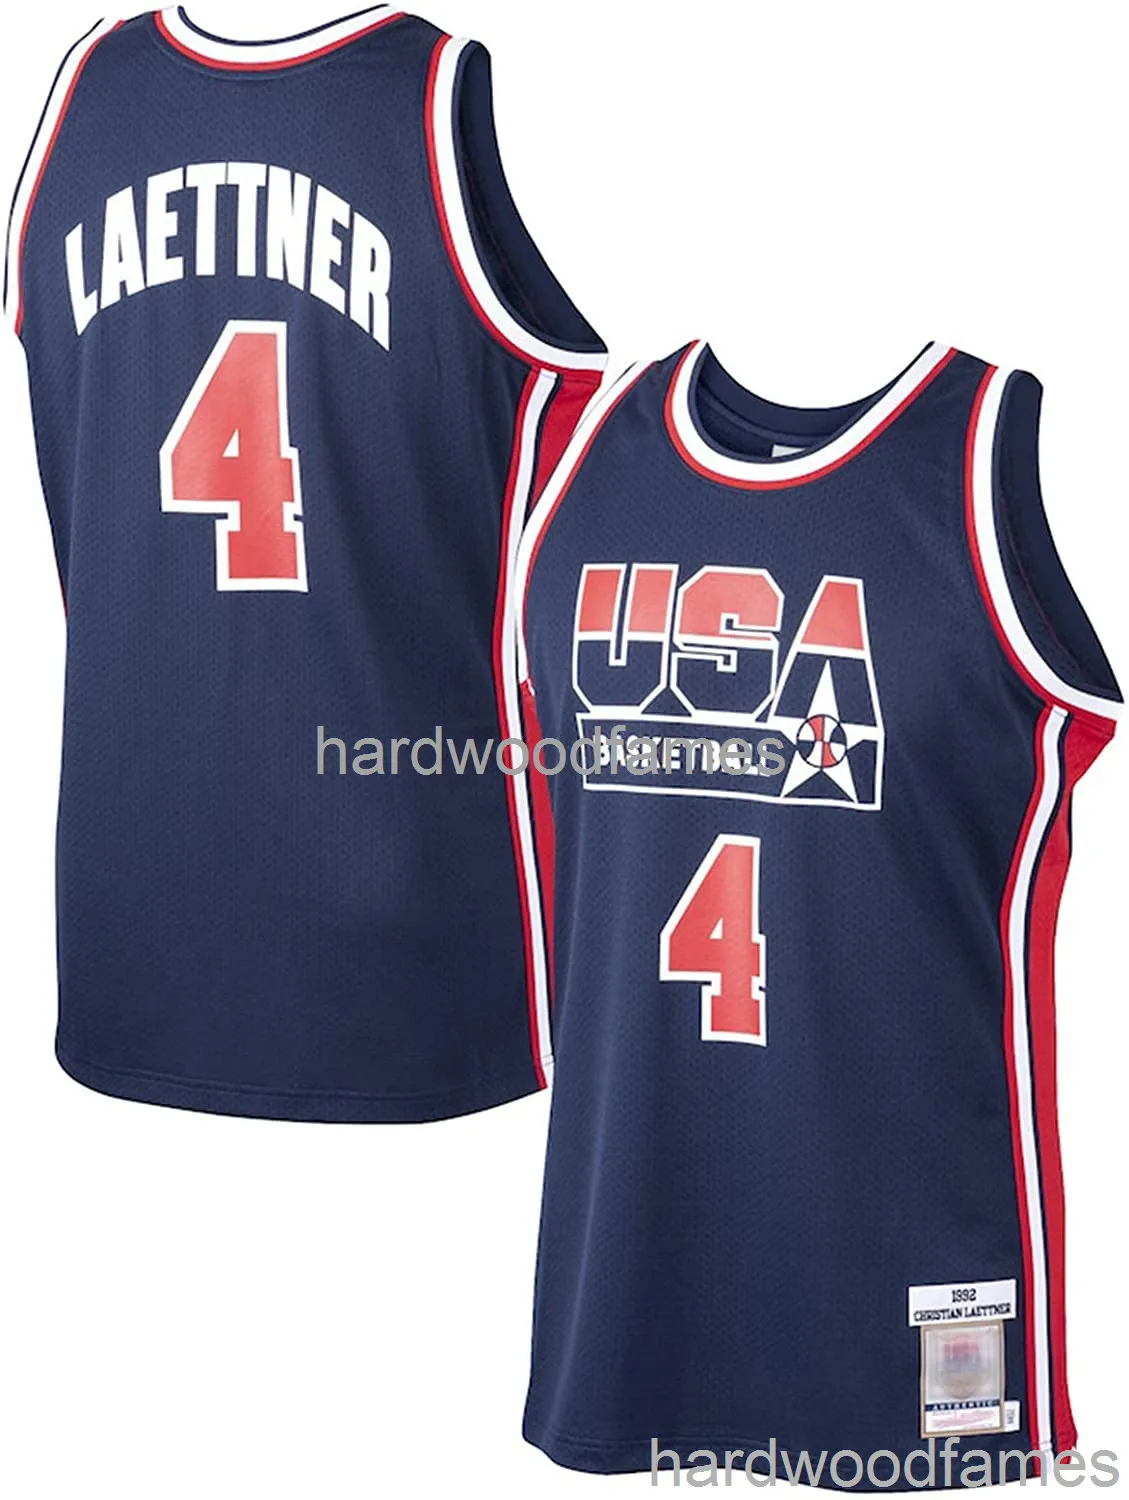 Genähte Laettner Retro-Basketball-Trikots Nr. 4 1992 Dream Team-Trikot, individuelles Herren-Damen-Jugend-Basketball-Trikot XS-5XL 6XL